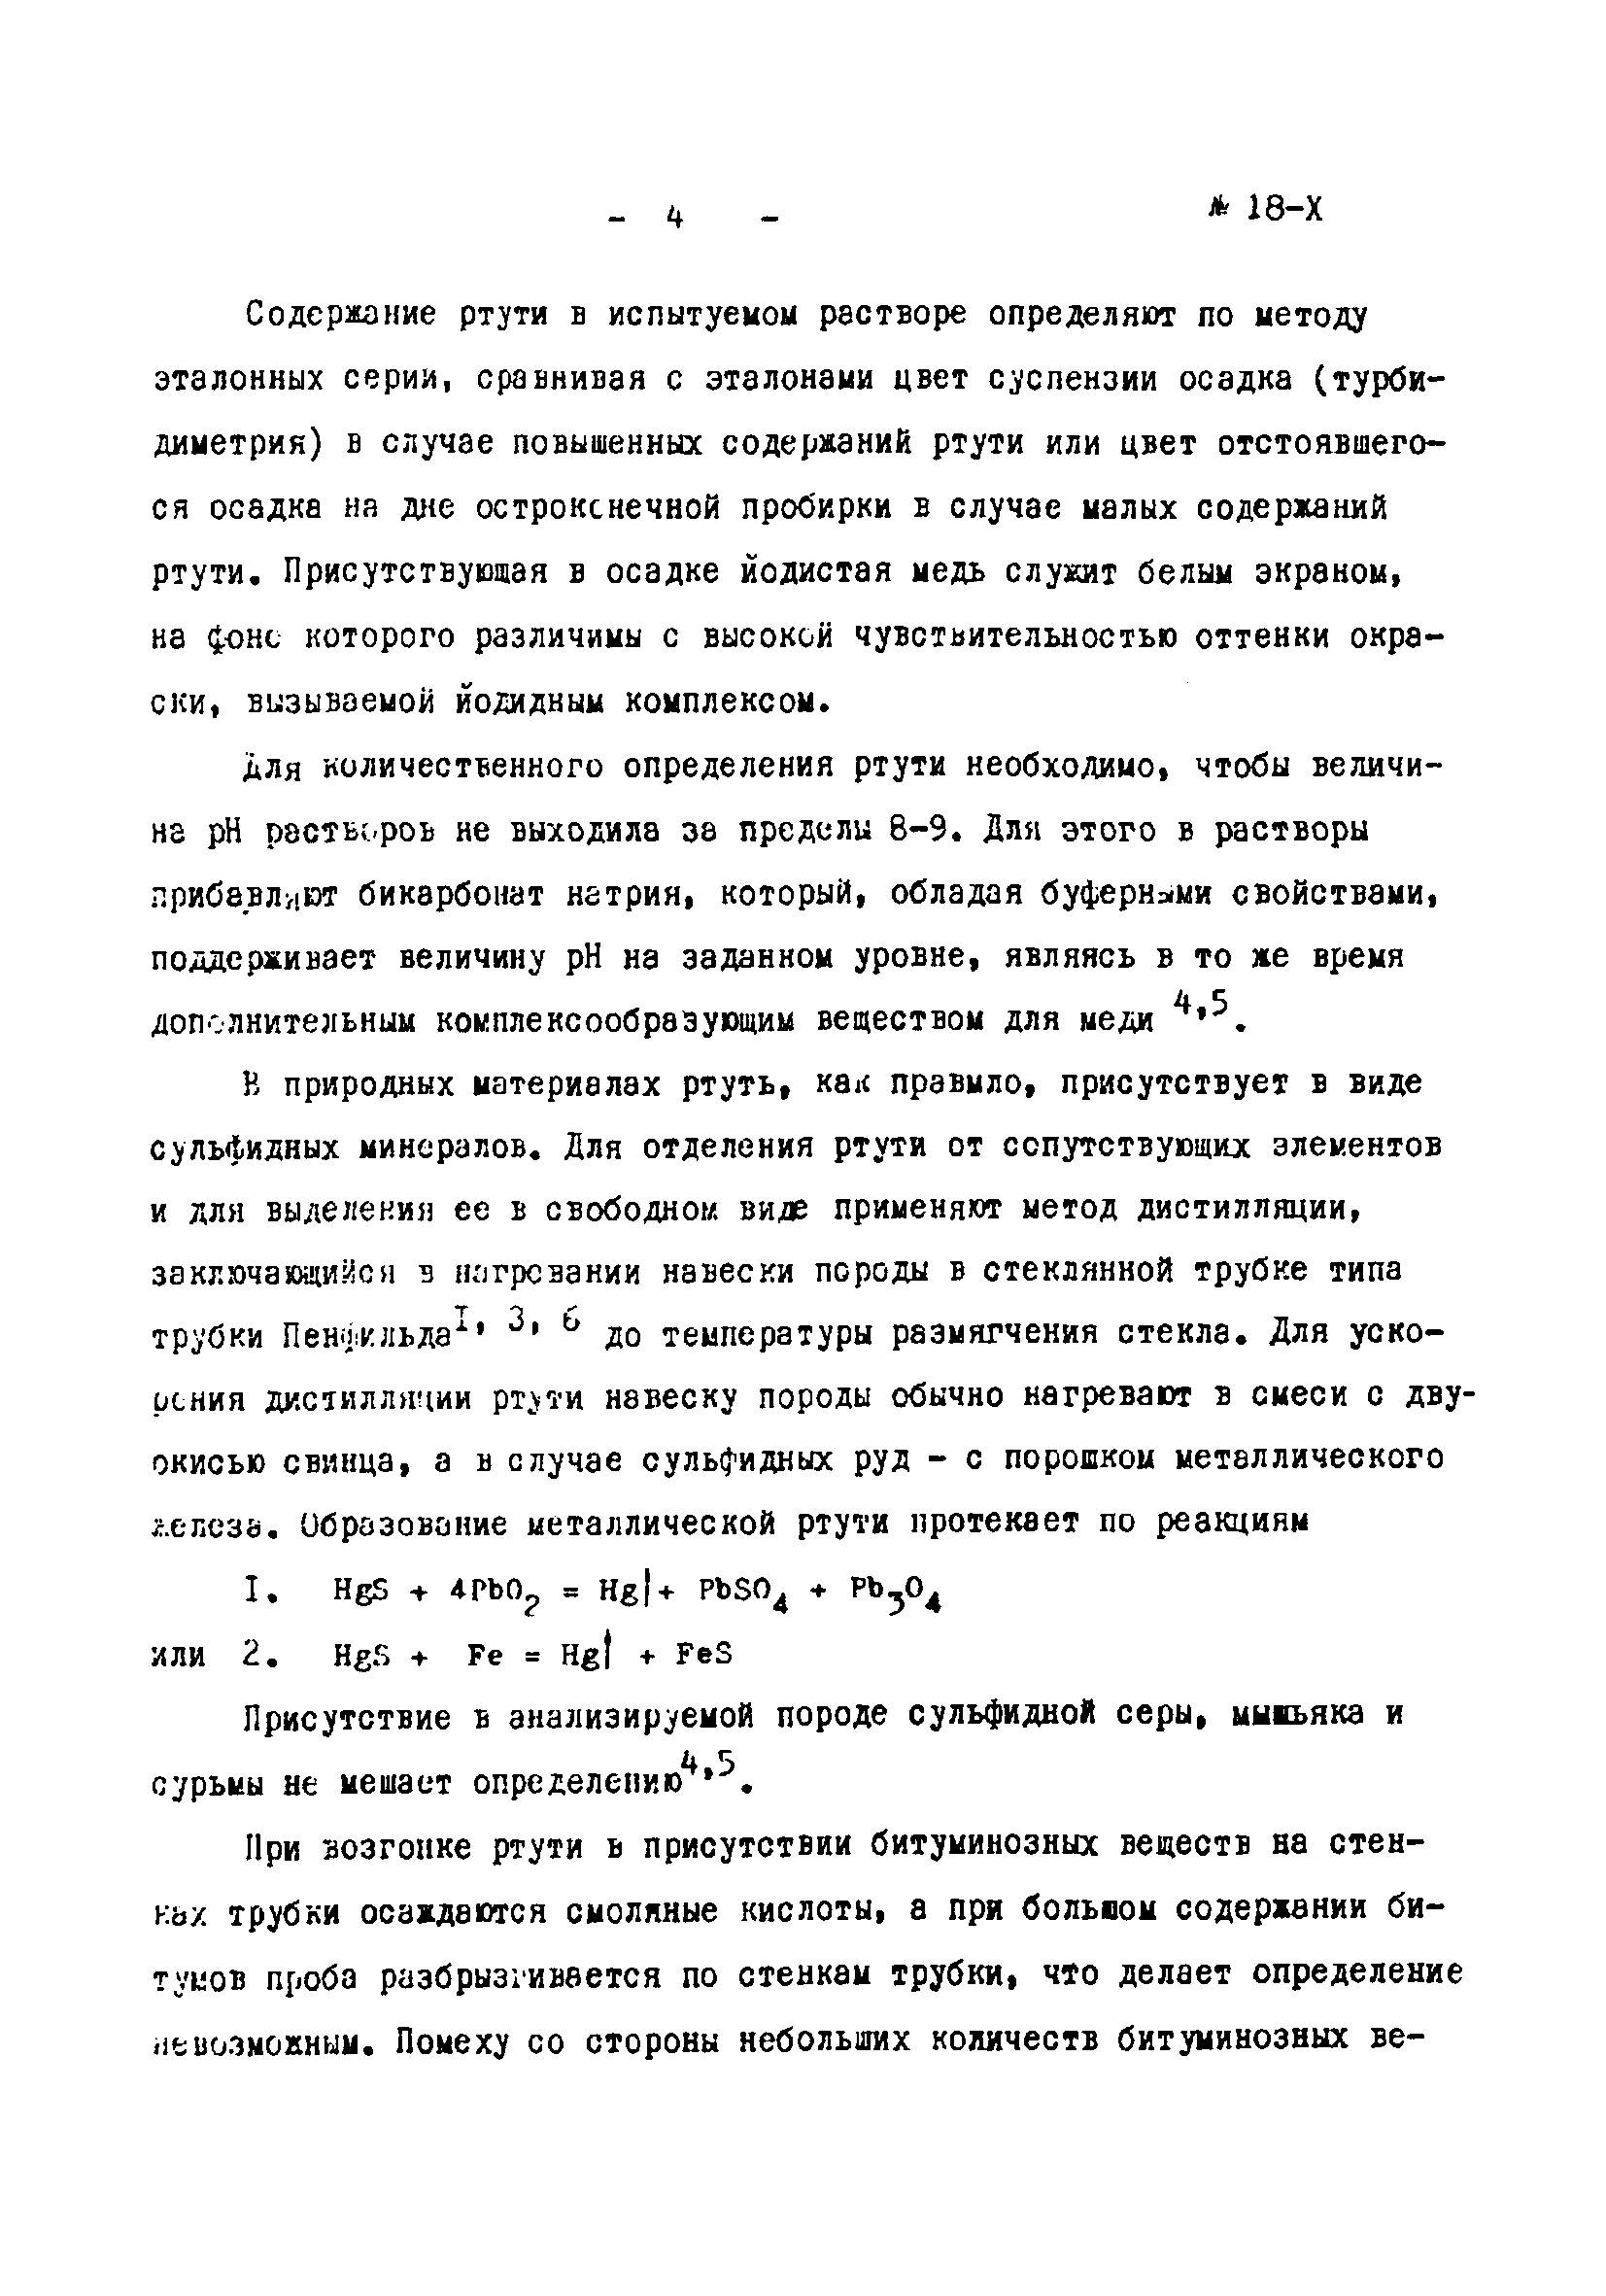 Инструкция НСАМ 18-Х